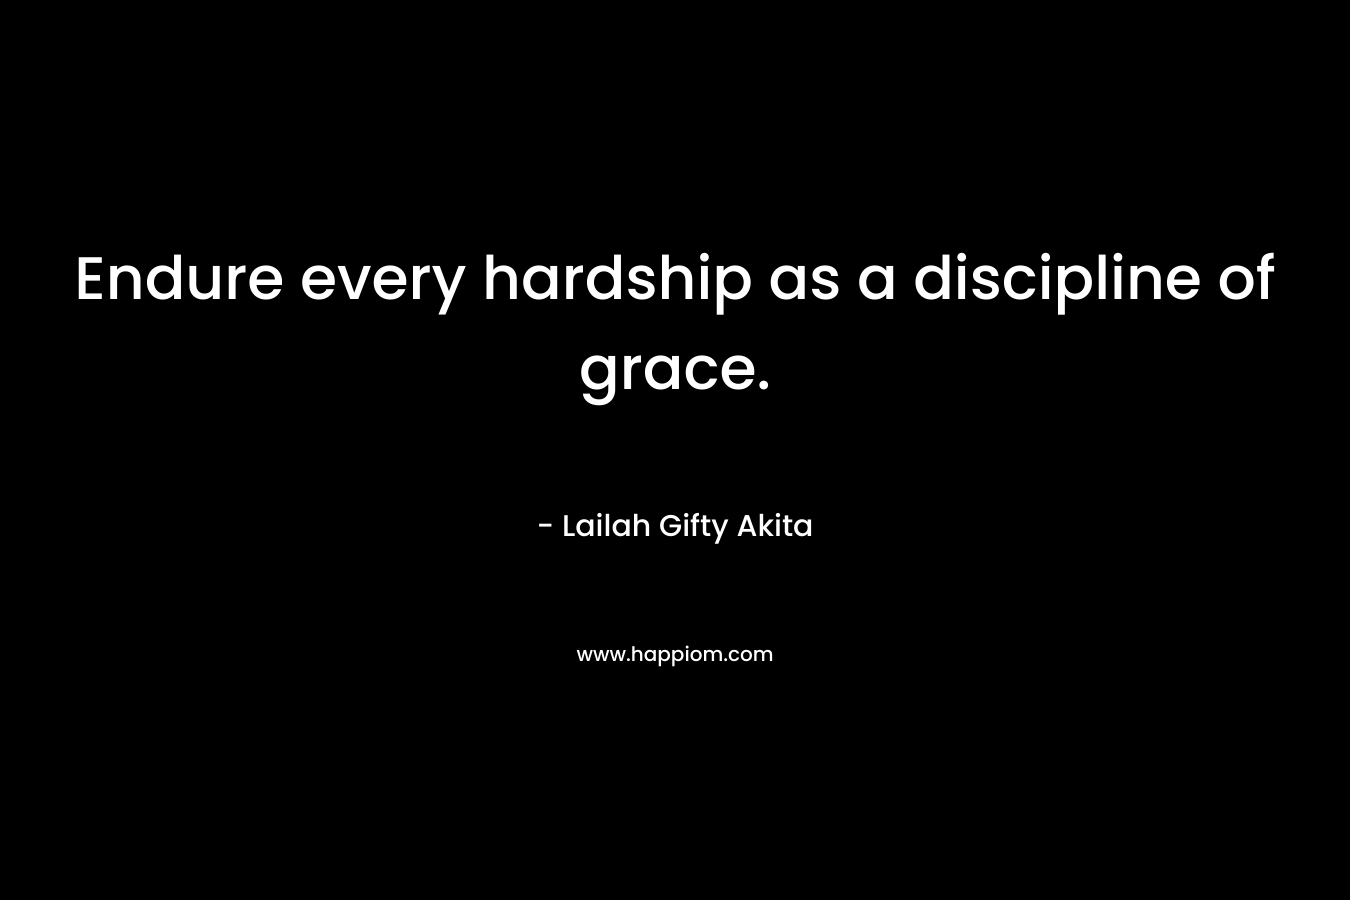 Endure every hardship as a discipline of grace.